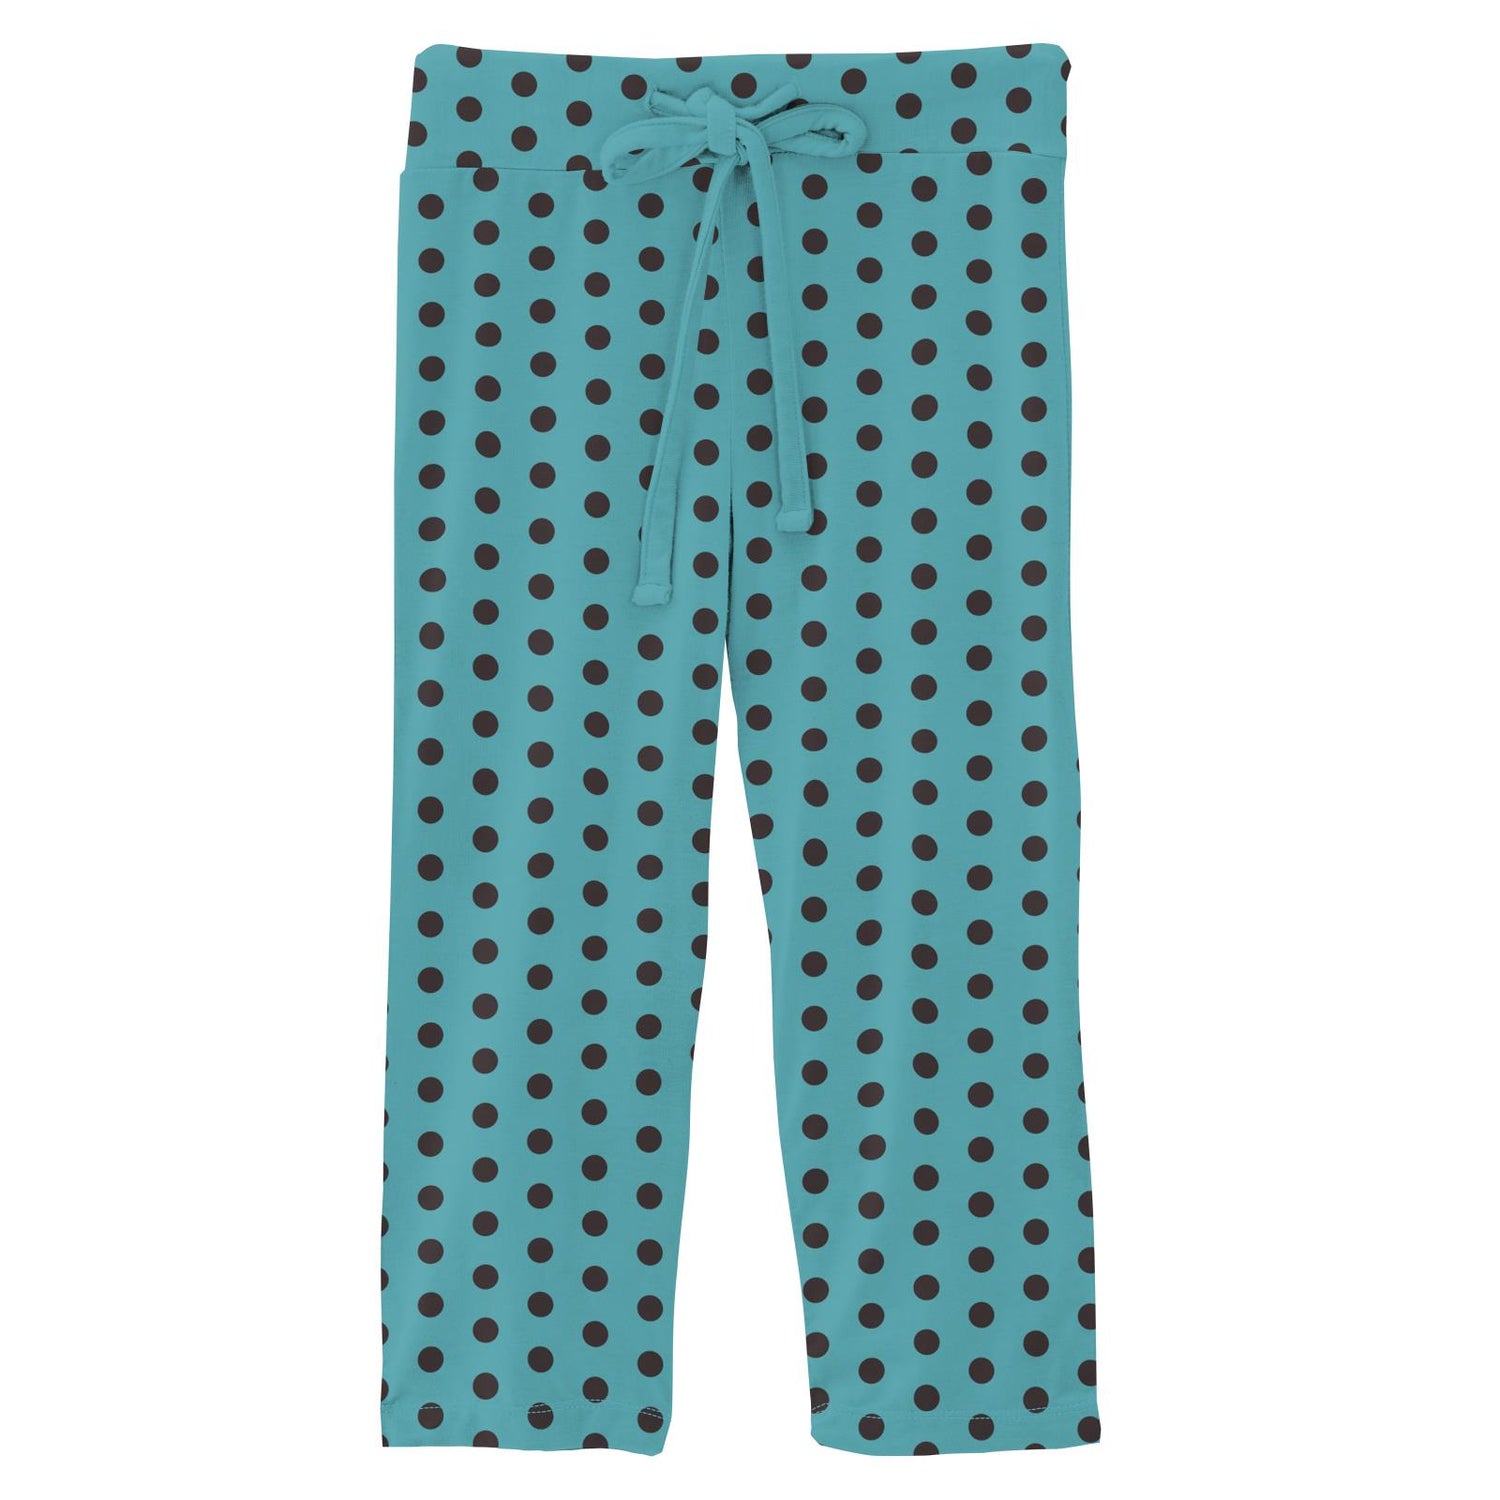 Print Relaxed Pants in Glacier Polka Dots